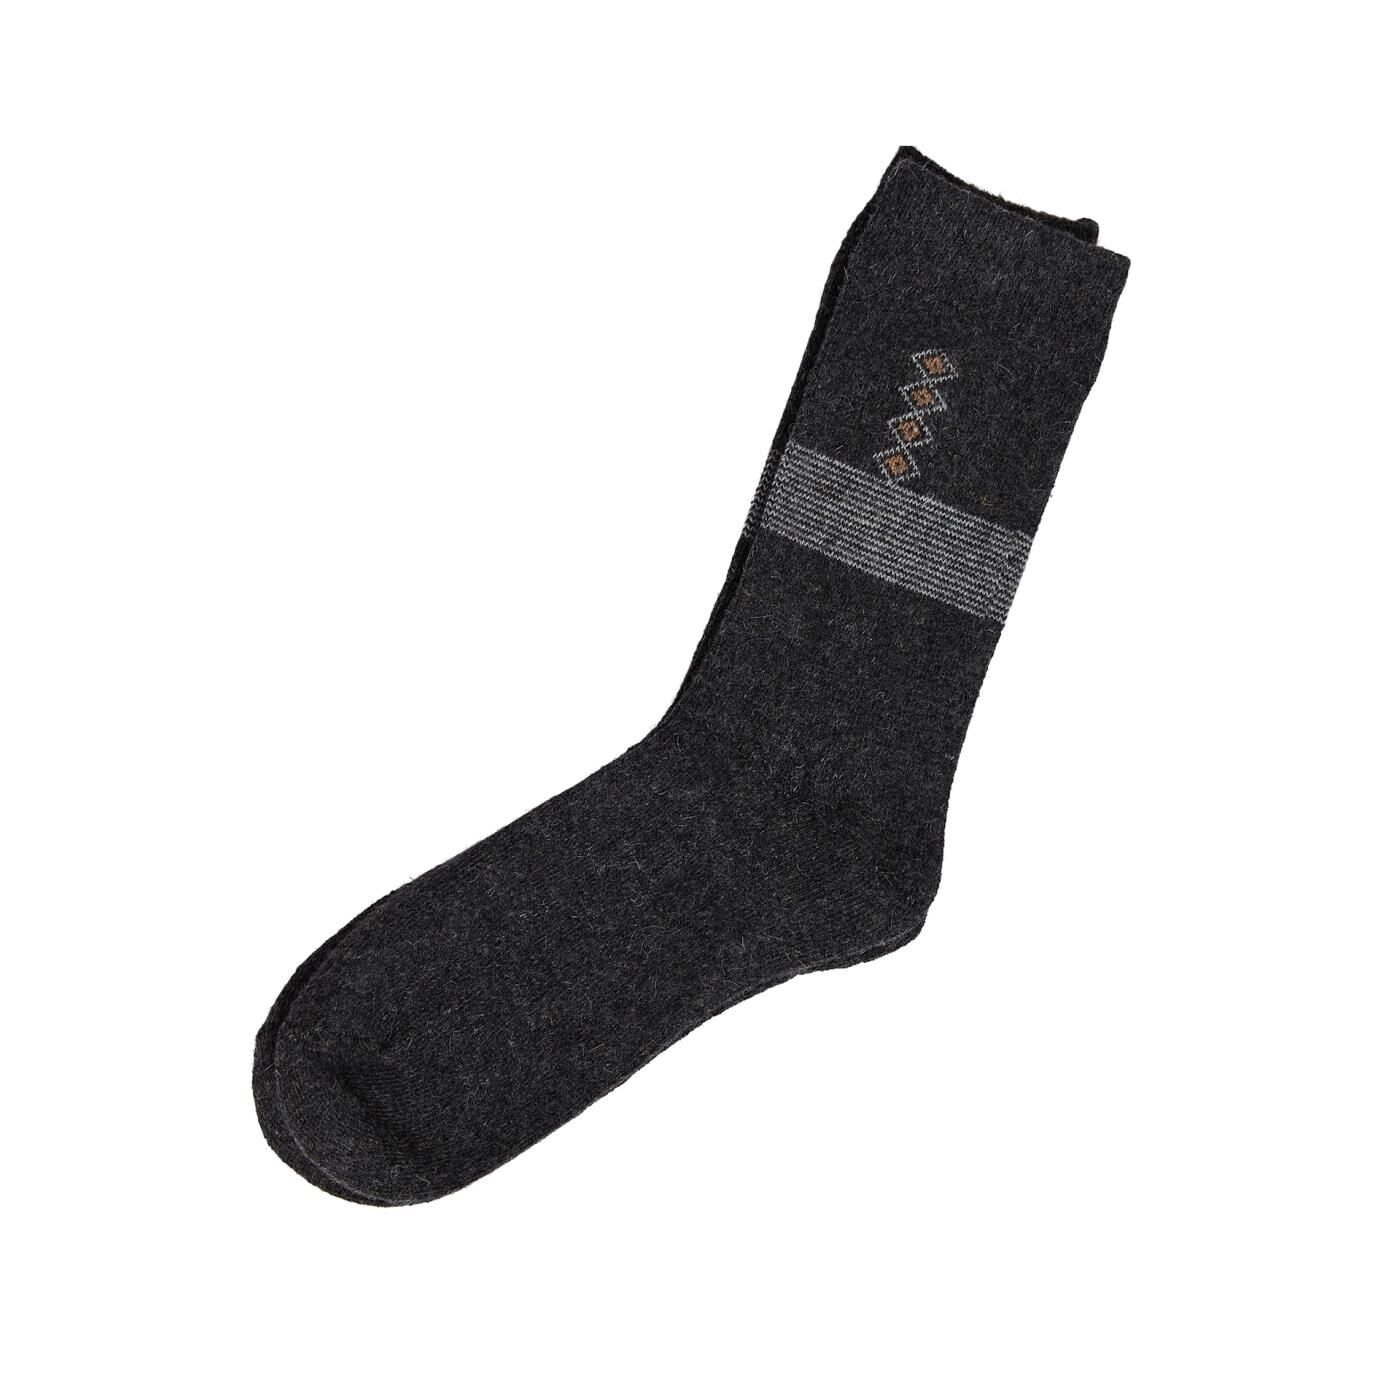 Celestino Aνδρικές κάλτσες με μαλλί  - Γκρι σκουρο - Grootte: One Size